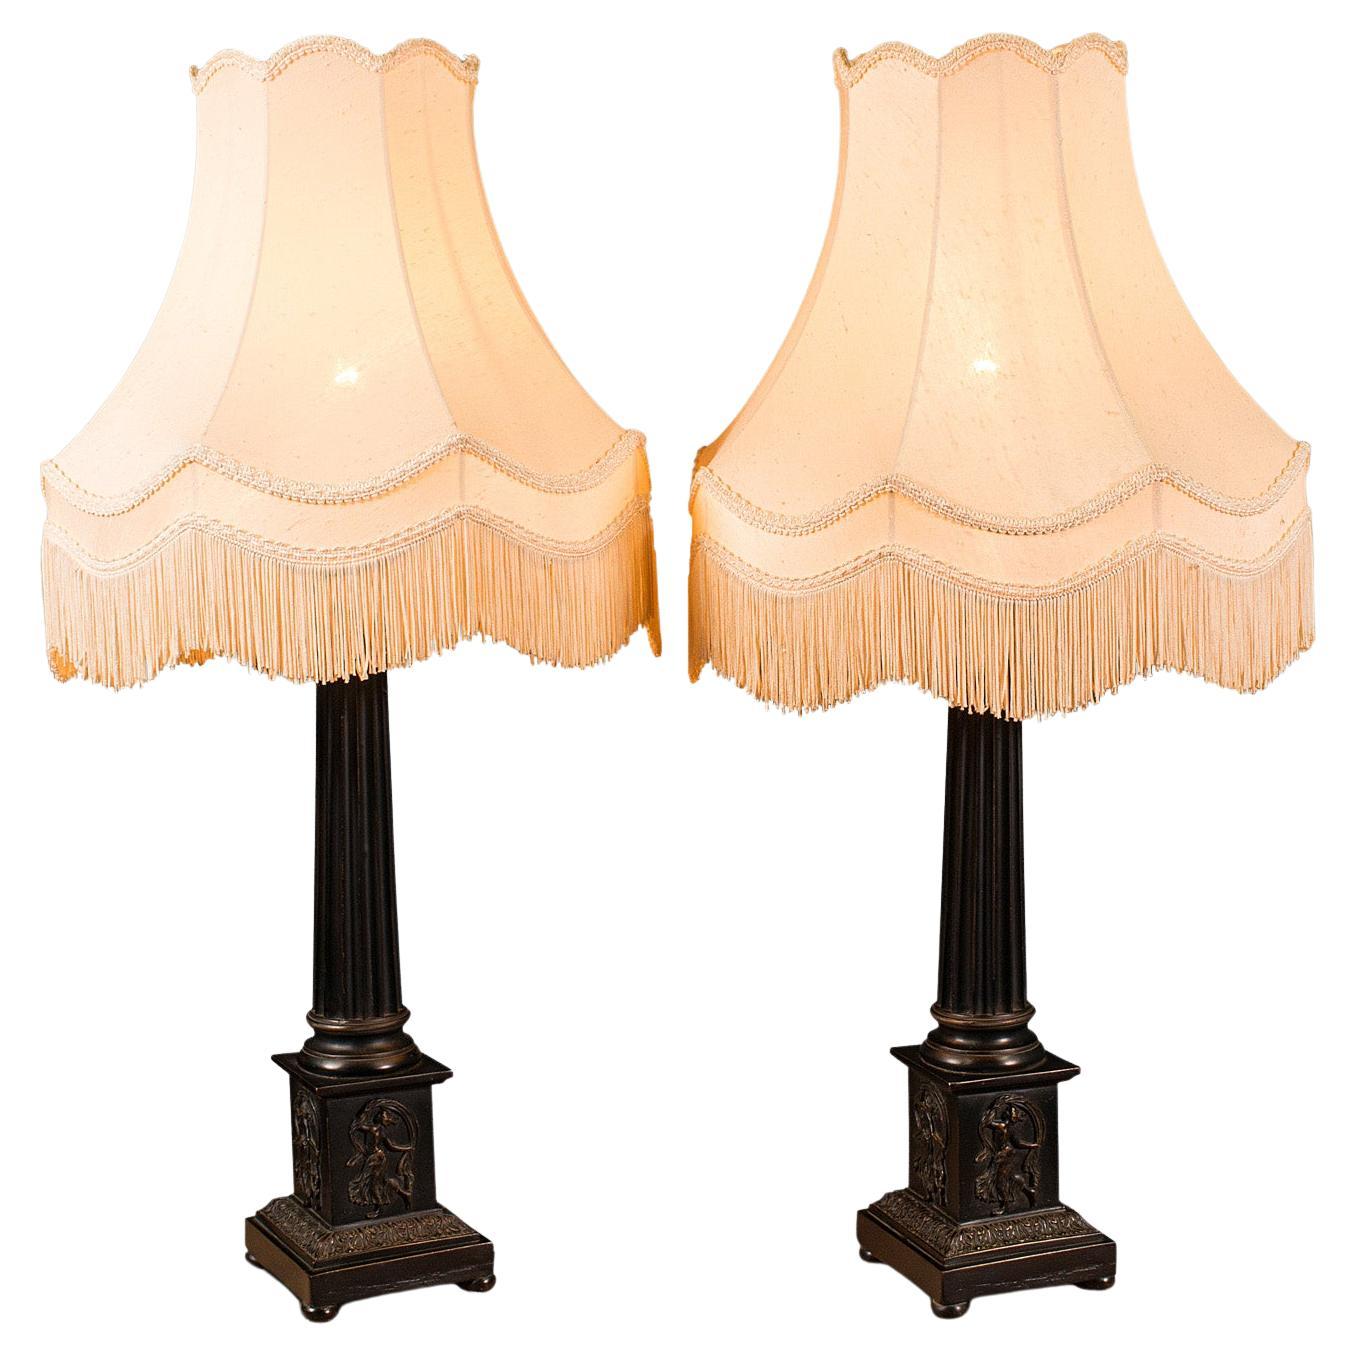 Pair of Vintage Corinthian Lamps, English, Bronzed, Table Light, Classical Taste